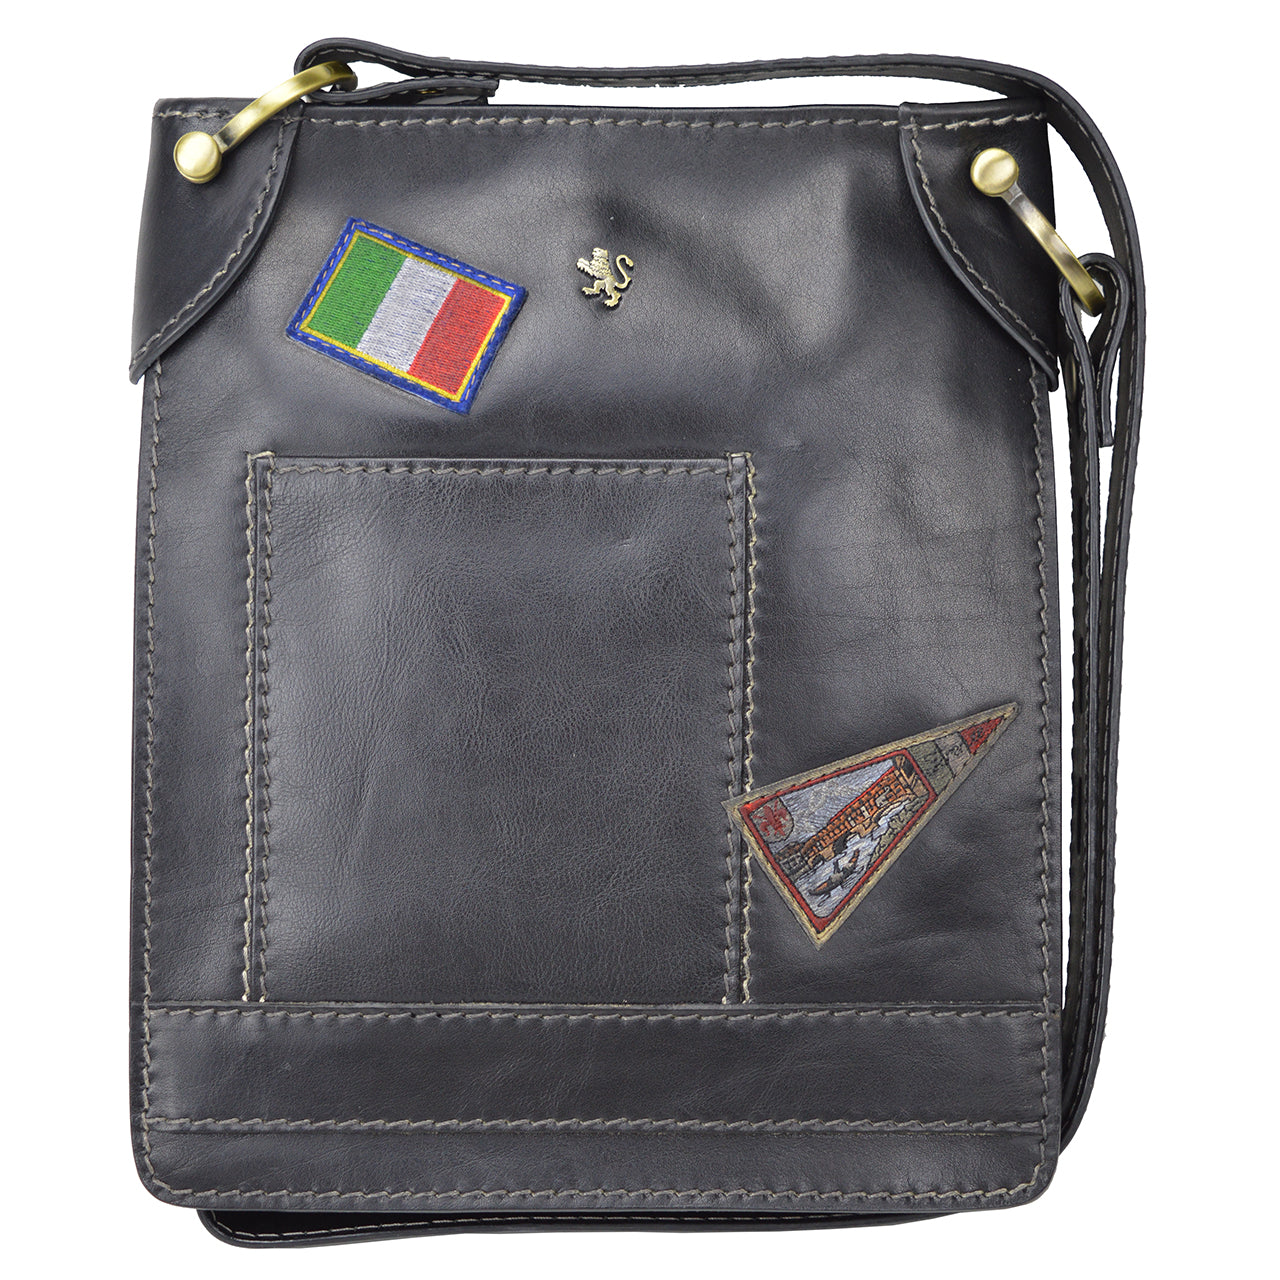 Pratesi Bakem Medium Bag in genuine Italian leather - Vegetable Tanned Italian Leather Black